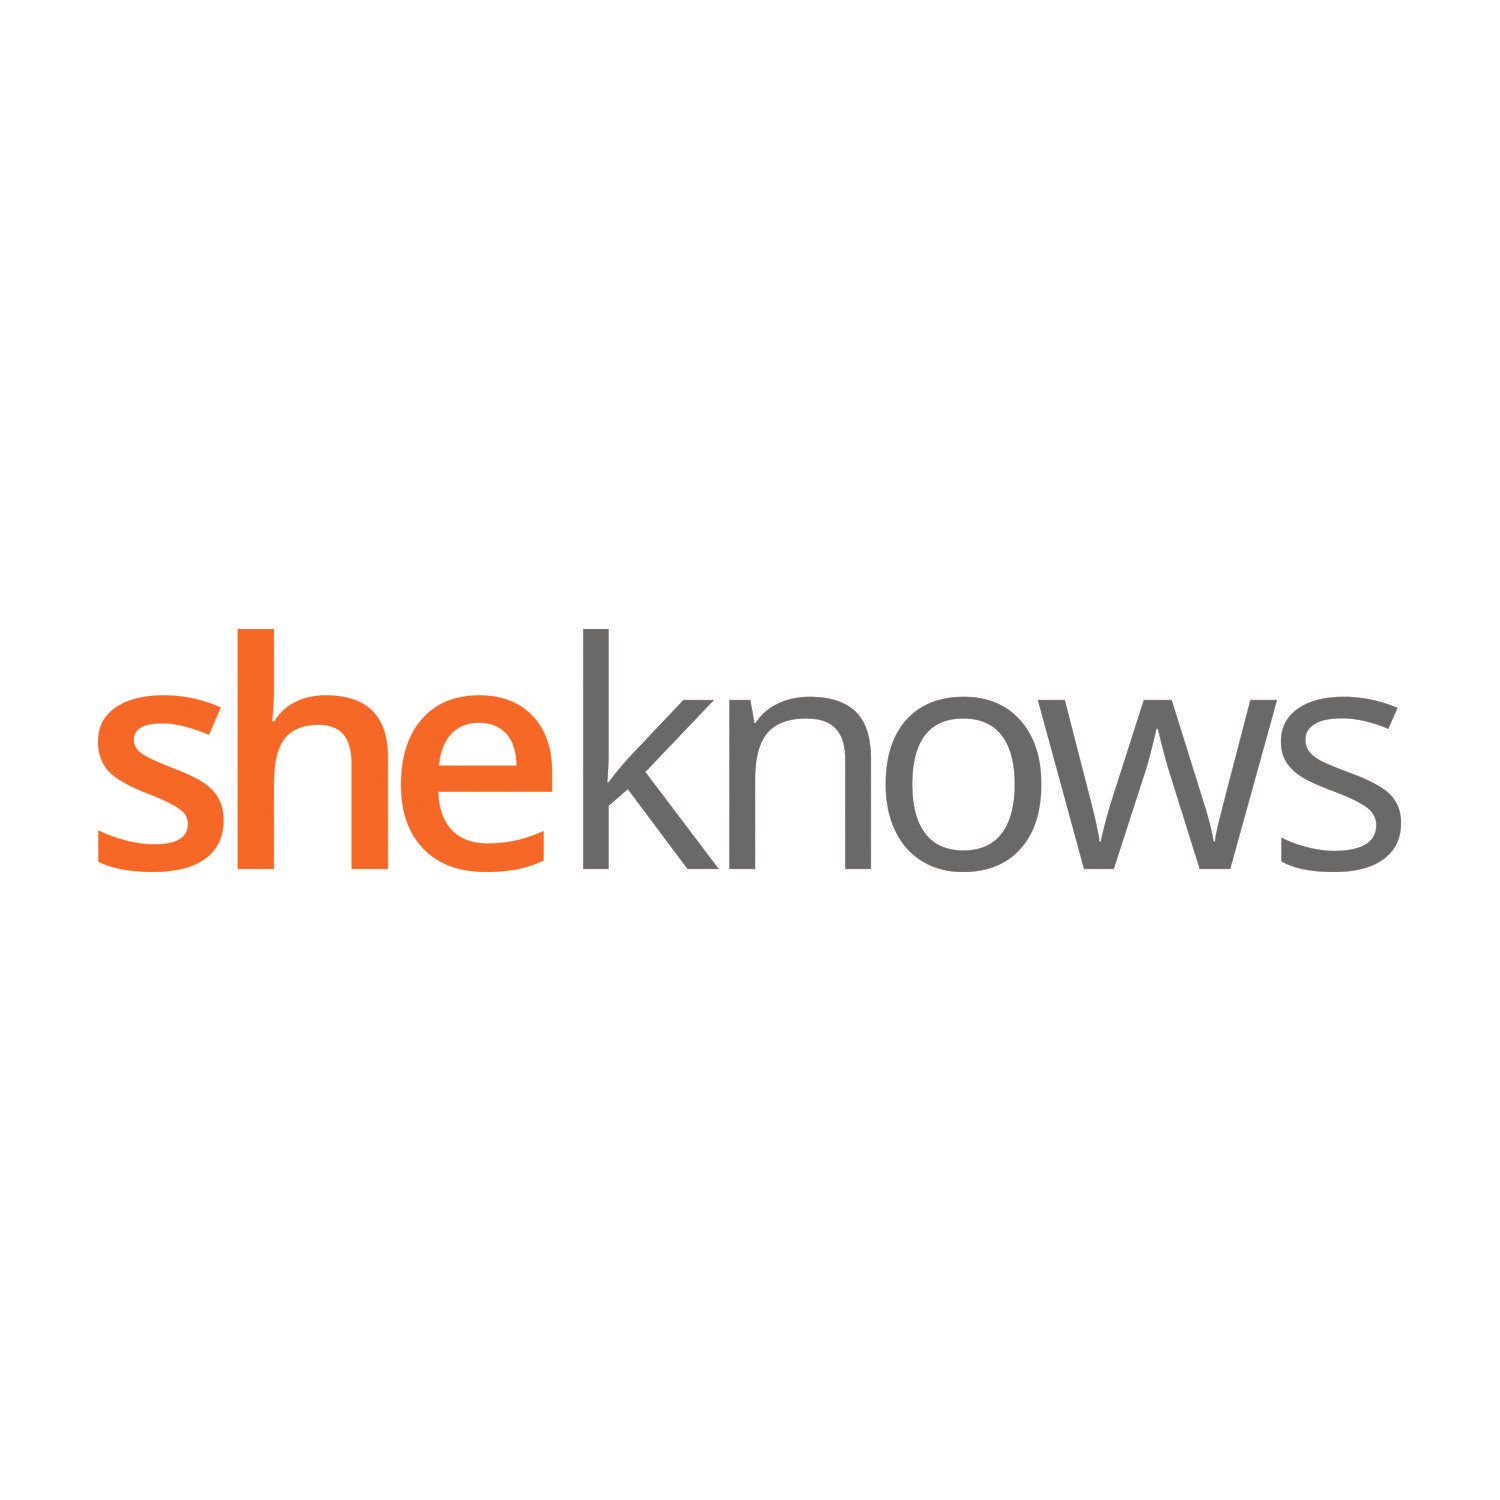 Sheknows.com Logo - Thrive Global